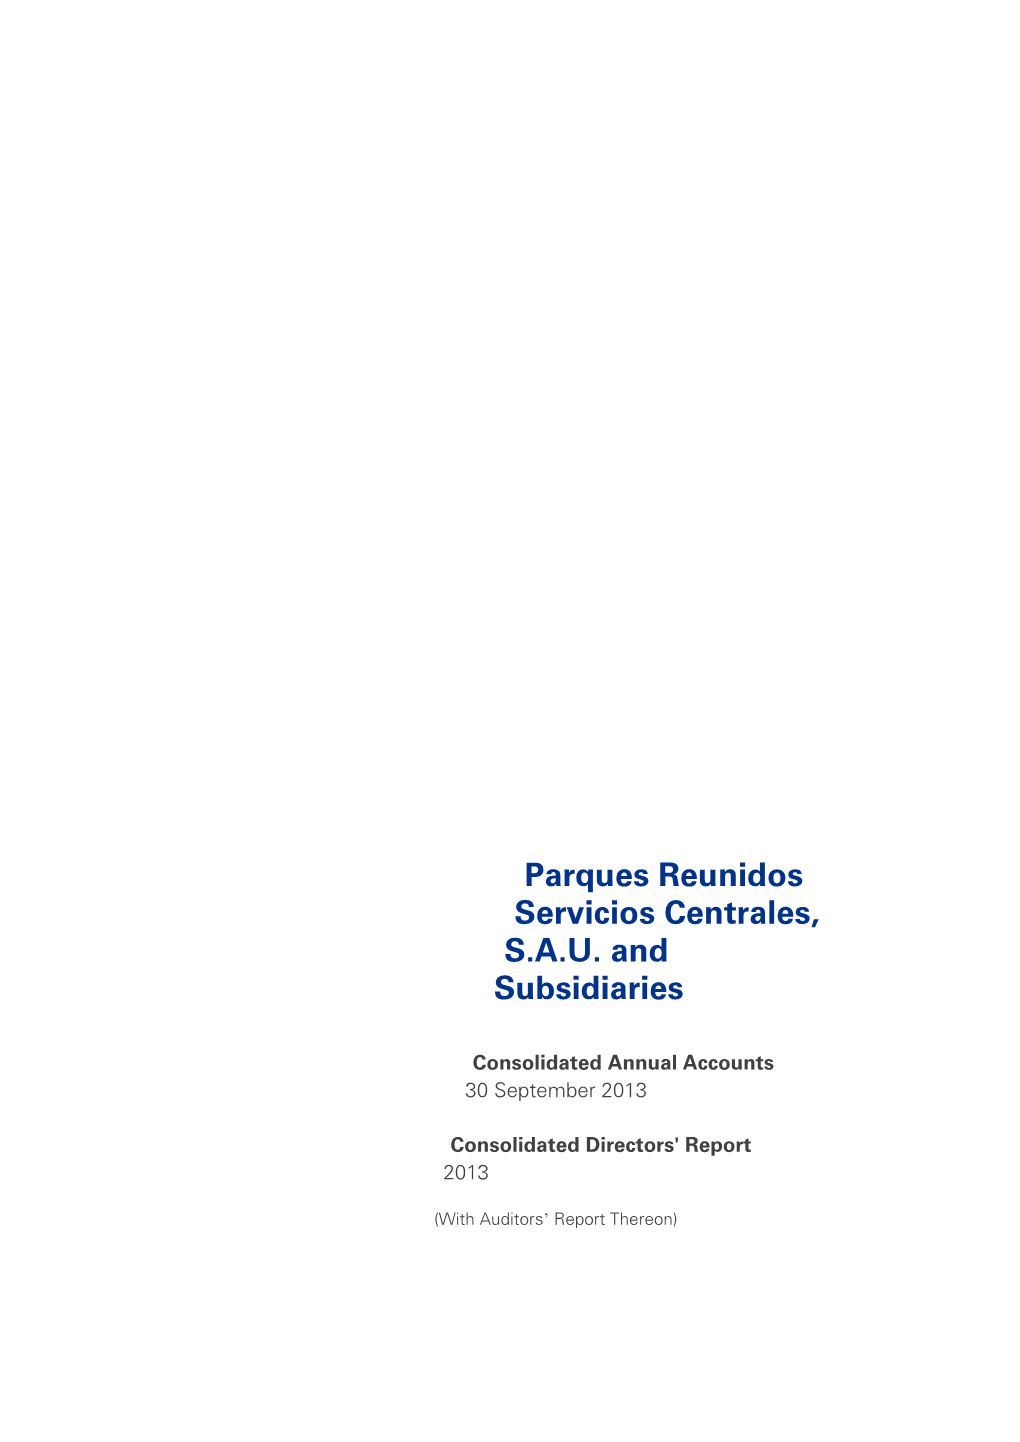 Parques Reunidos Servicios Centrales, S.A.U. and Subsidiaries